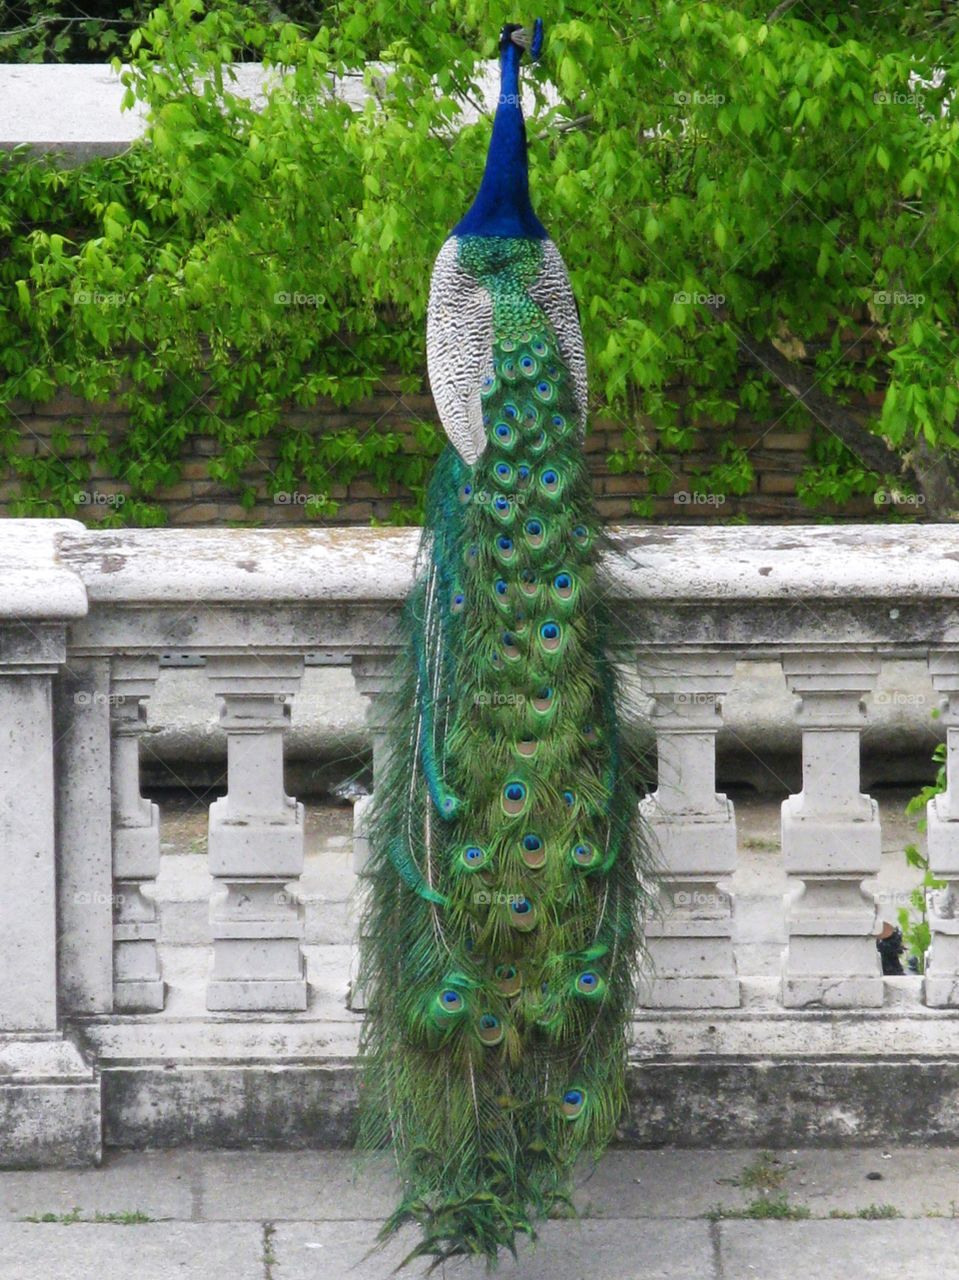 Wild Peacock in Spain